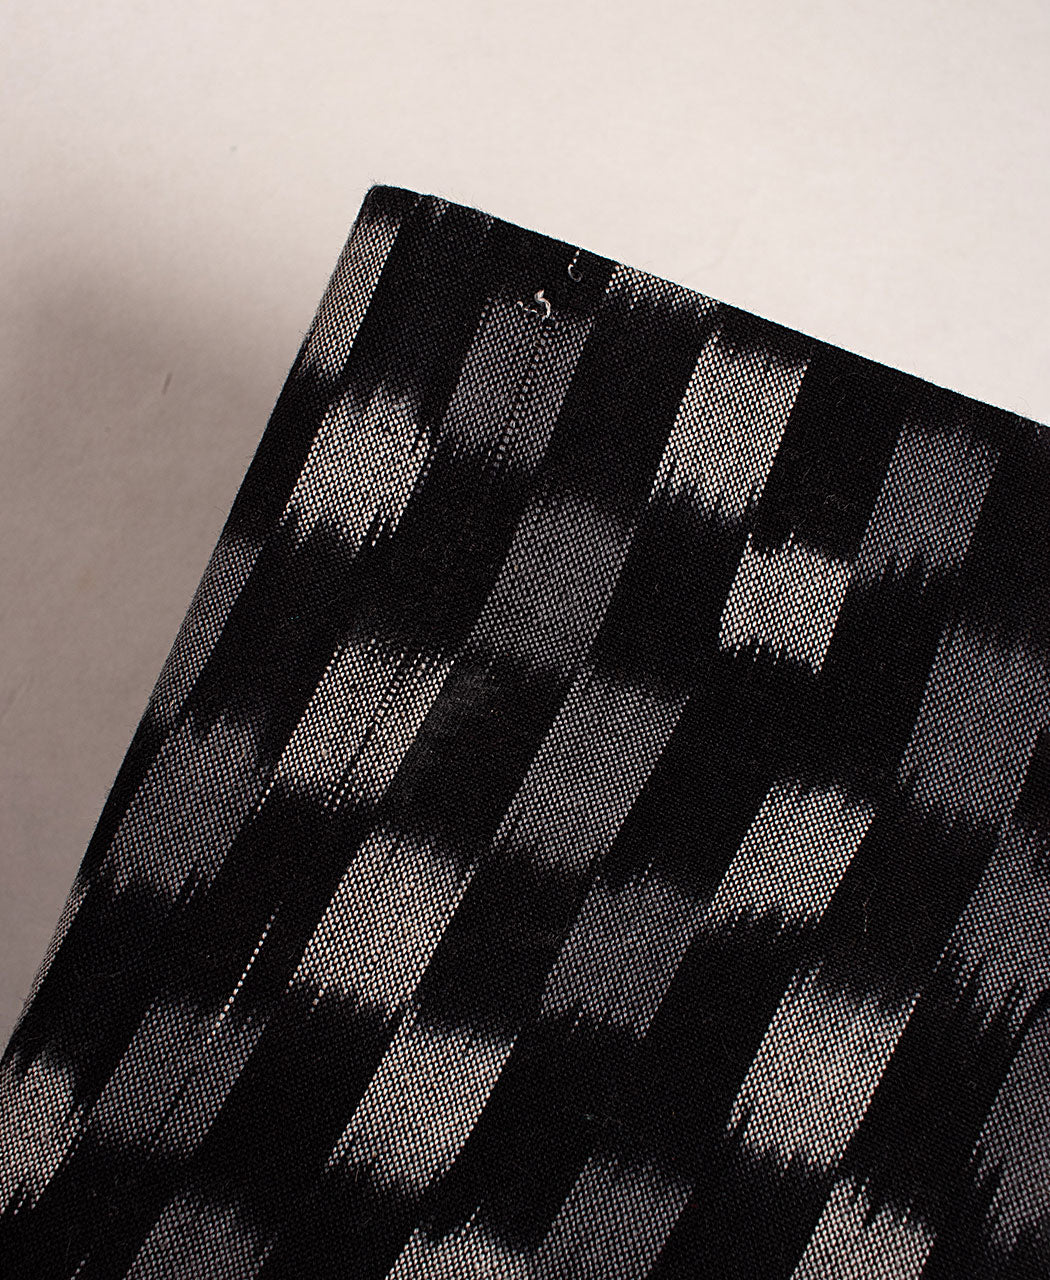 Handmade Ikat Woven Cotton Fabric Cover Diary